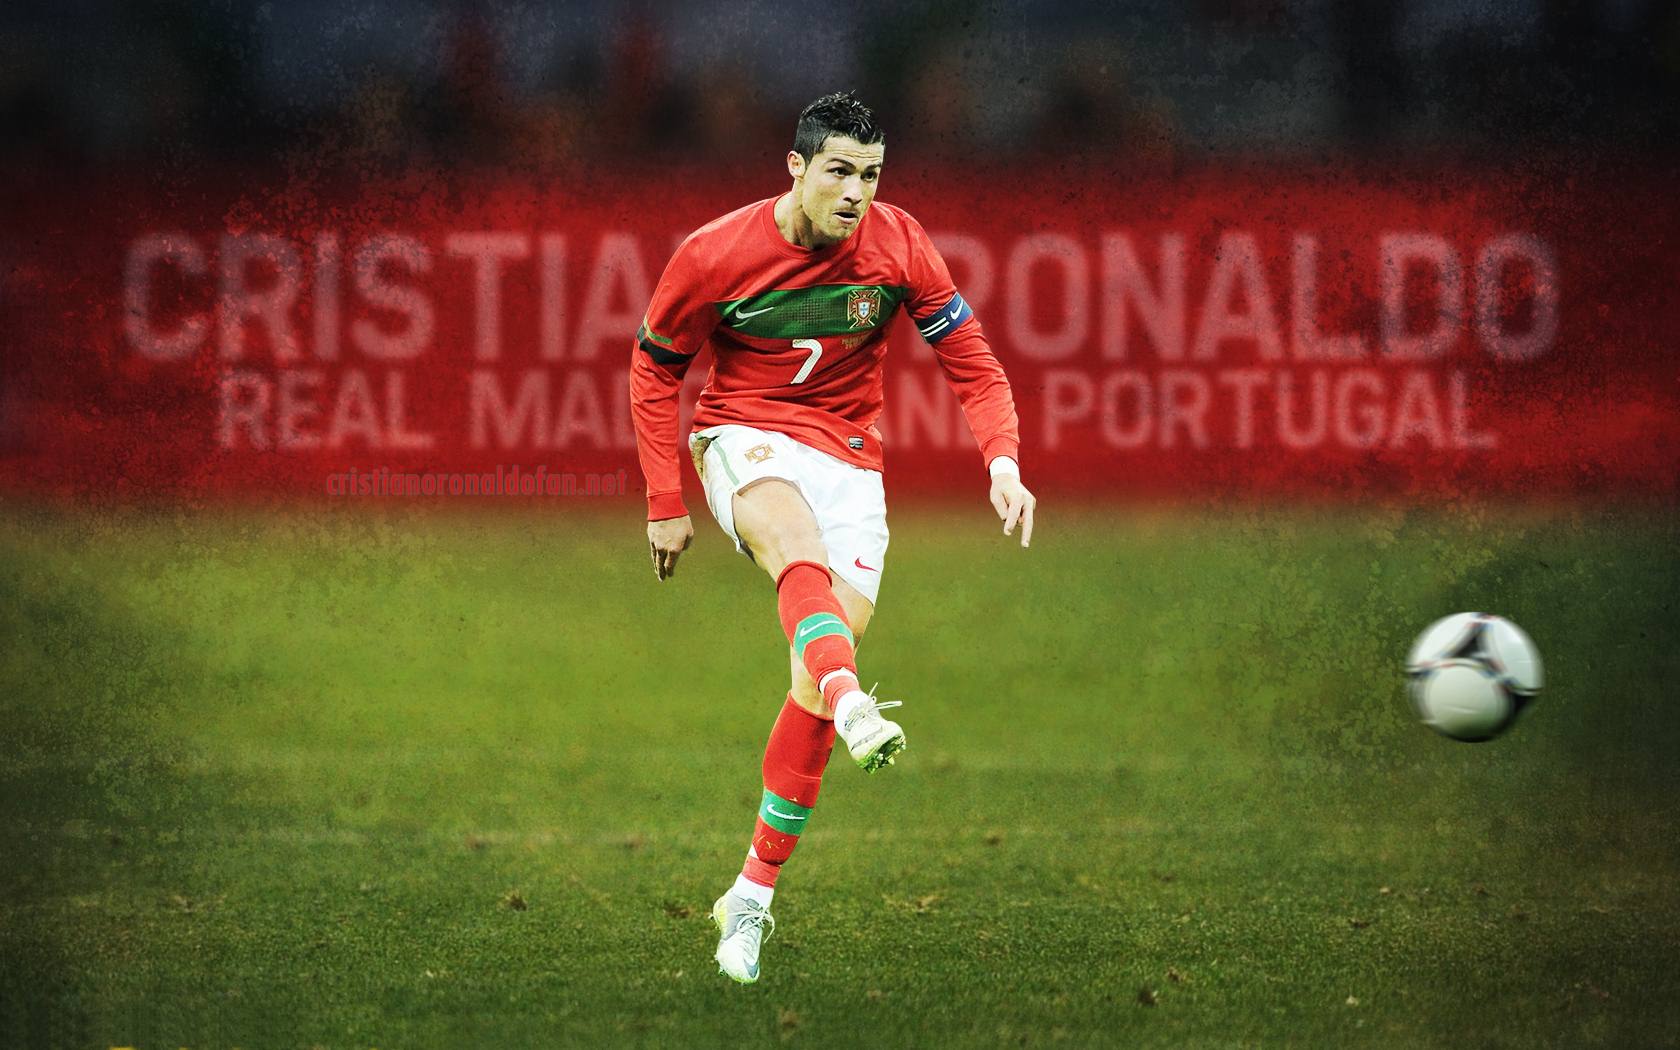 Cristiano Ronaldo, Cr Football Player, Real Madrid, Jersey, King